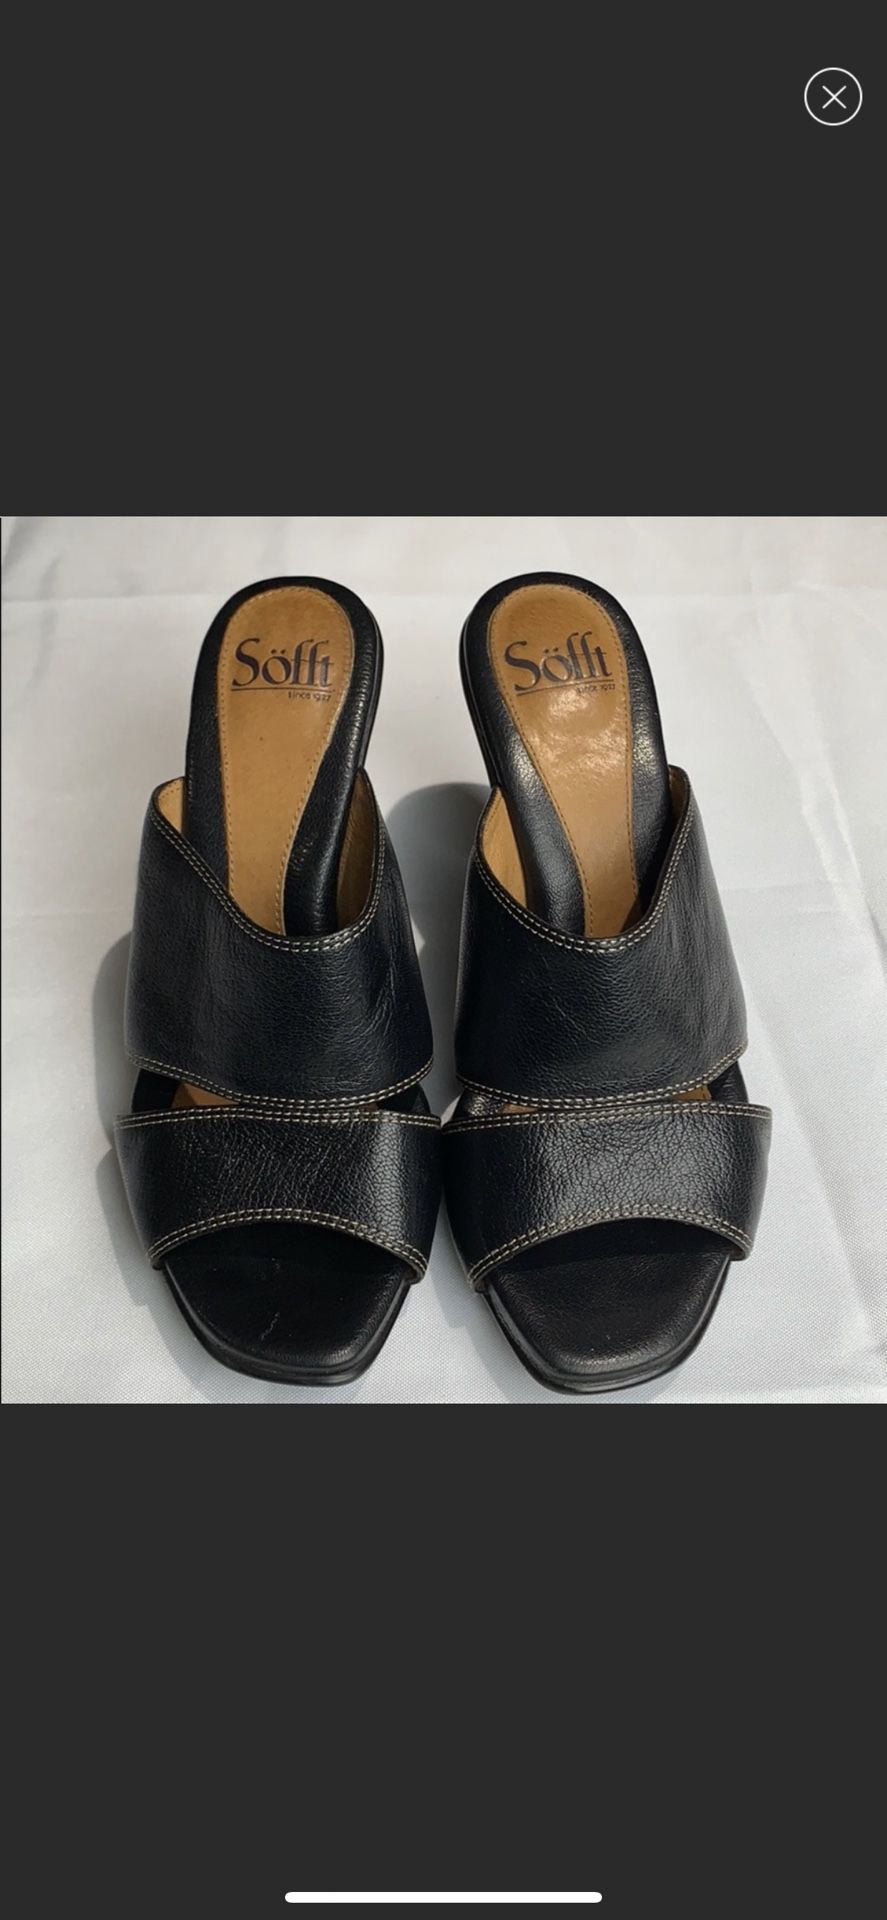 Söfft Black Leather Slip-on Sandal Heels Size 7